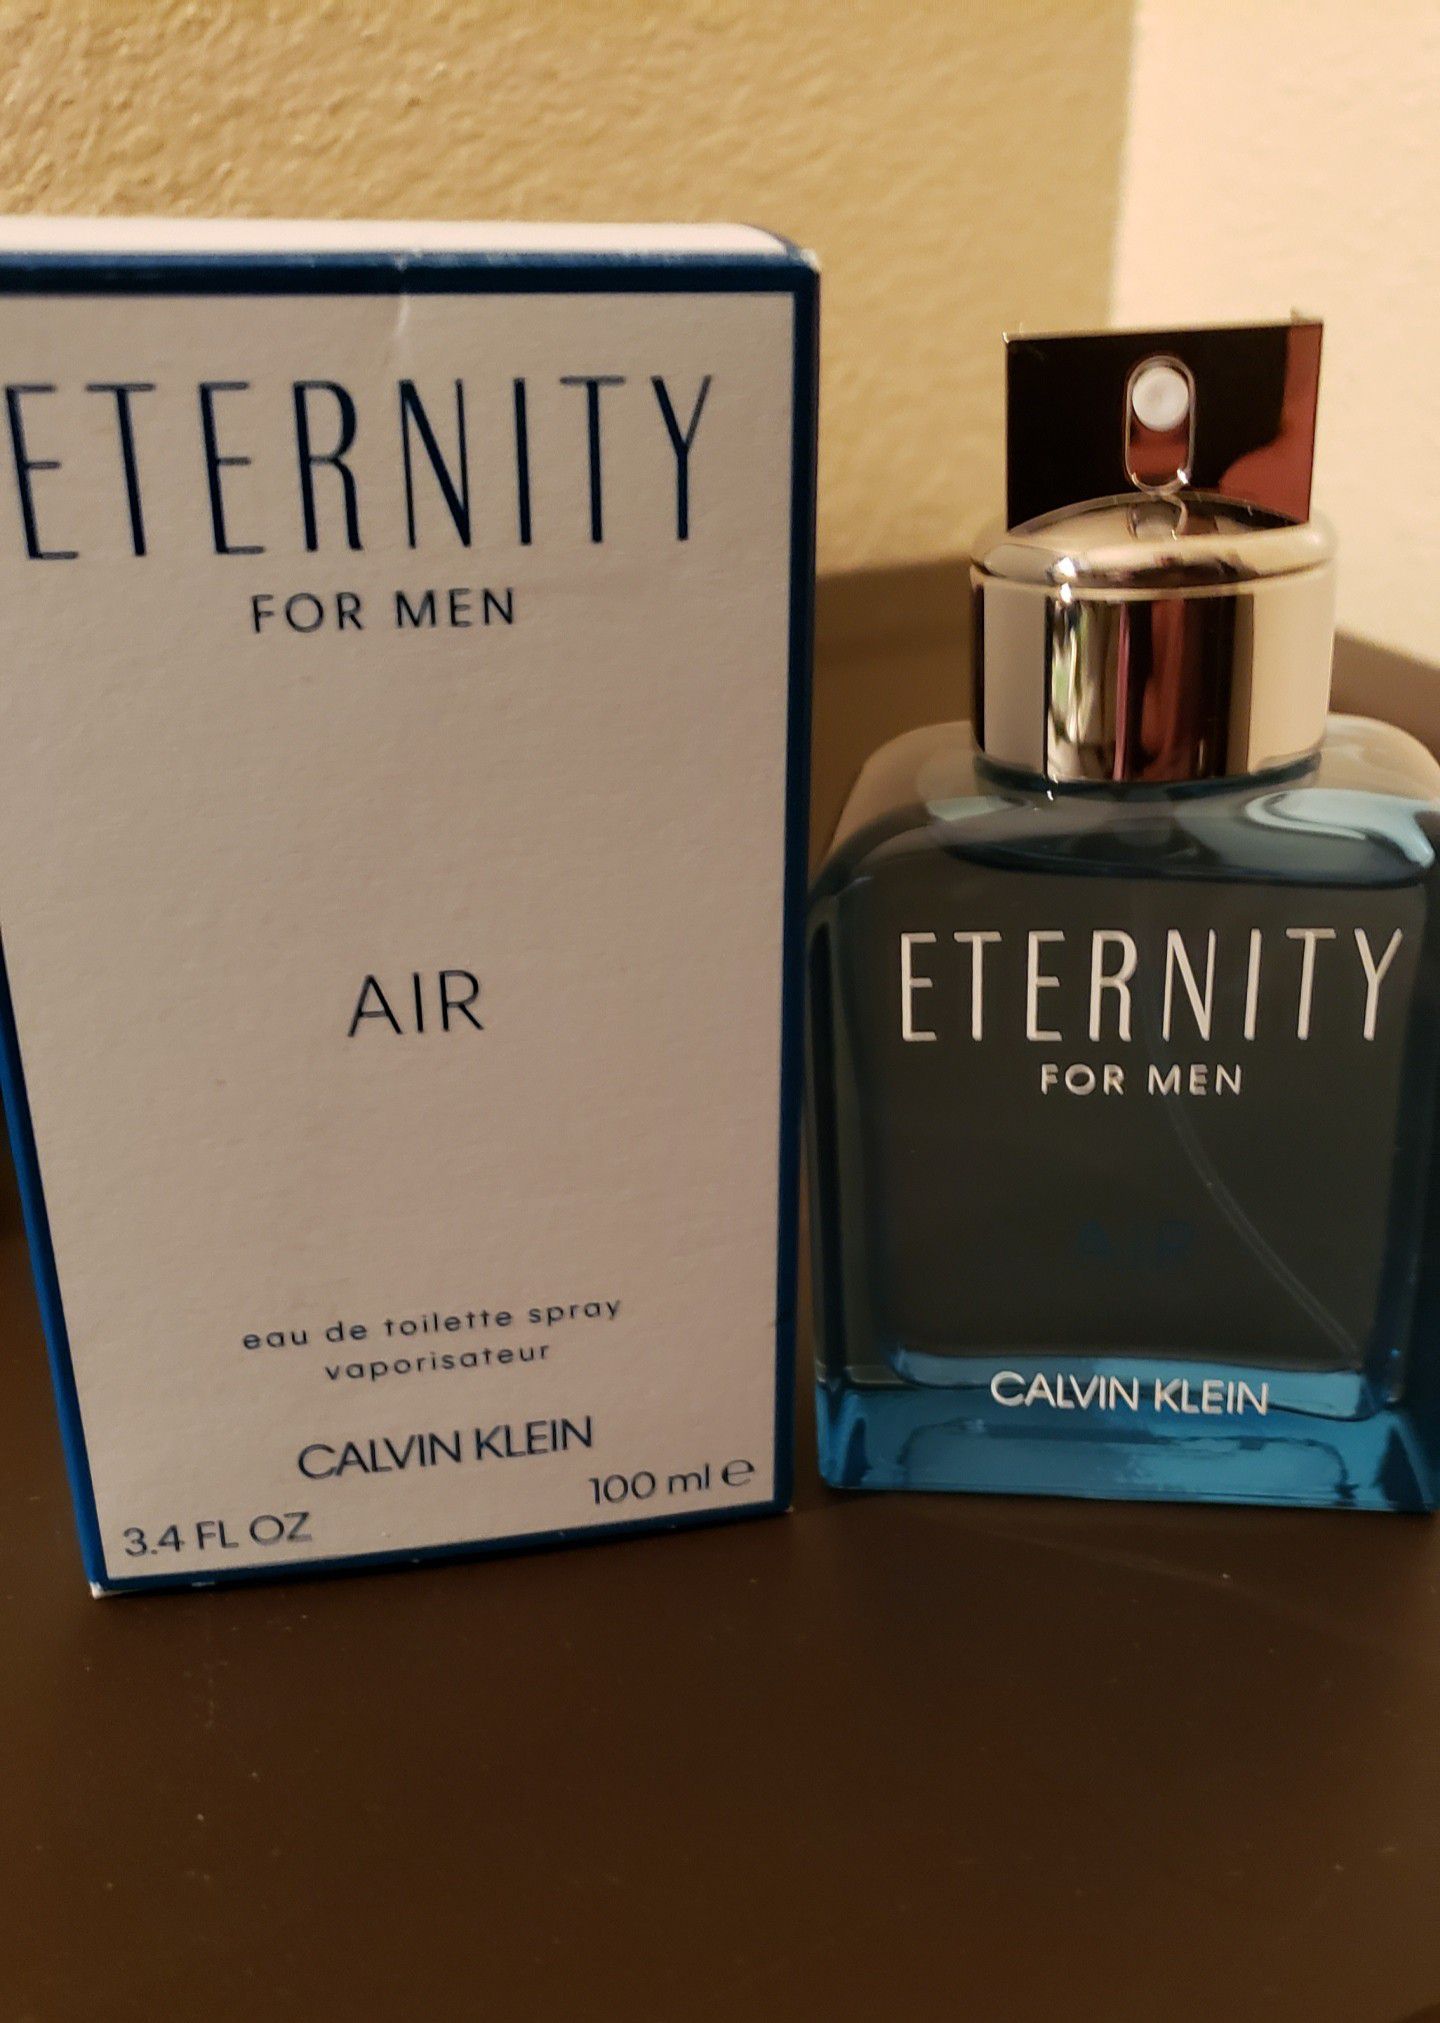 Calvin Klein Eternity Air for Men 3.4 fl.oz $60